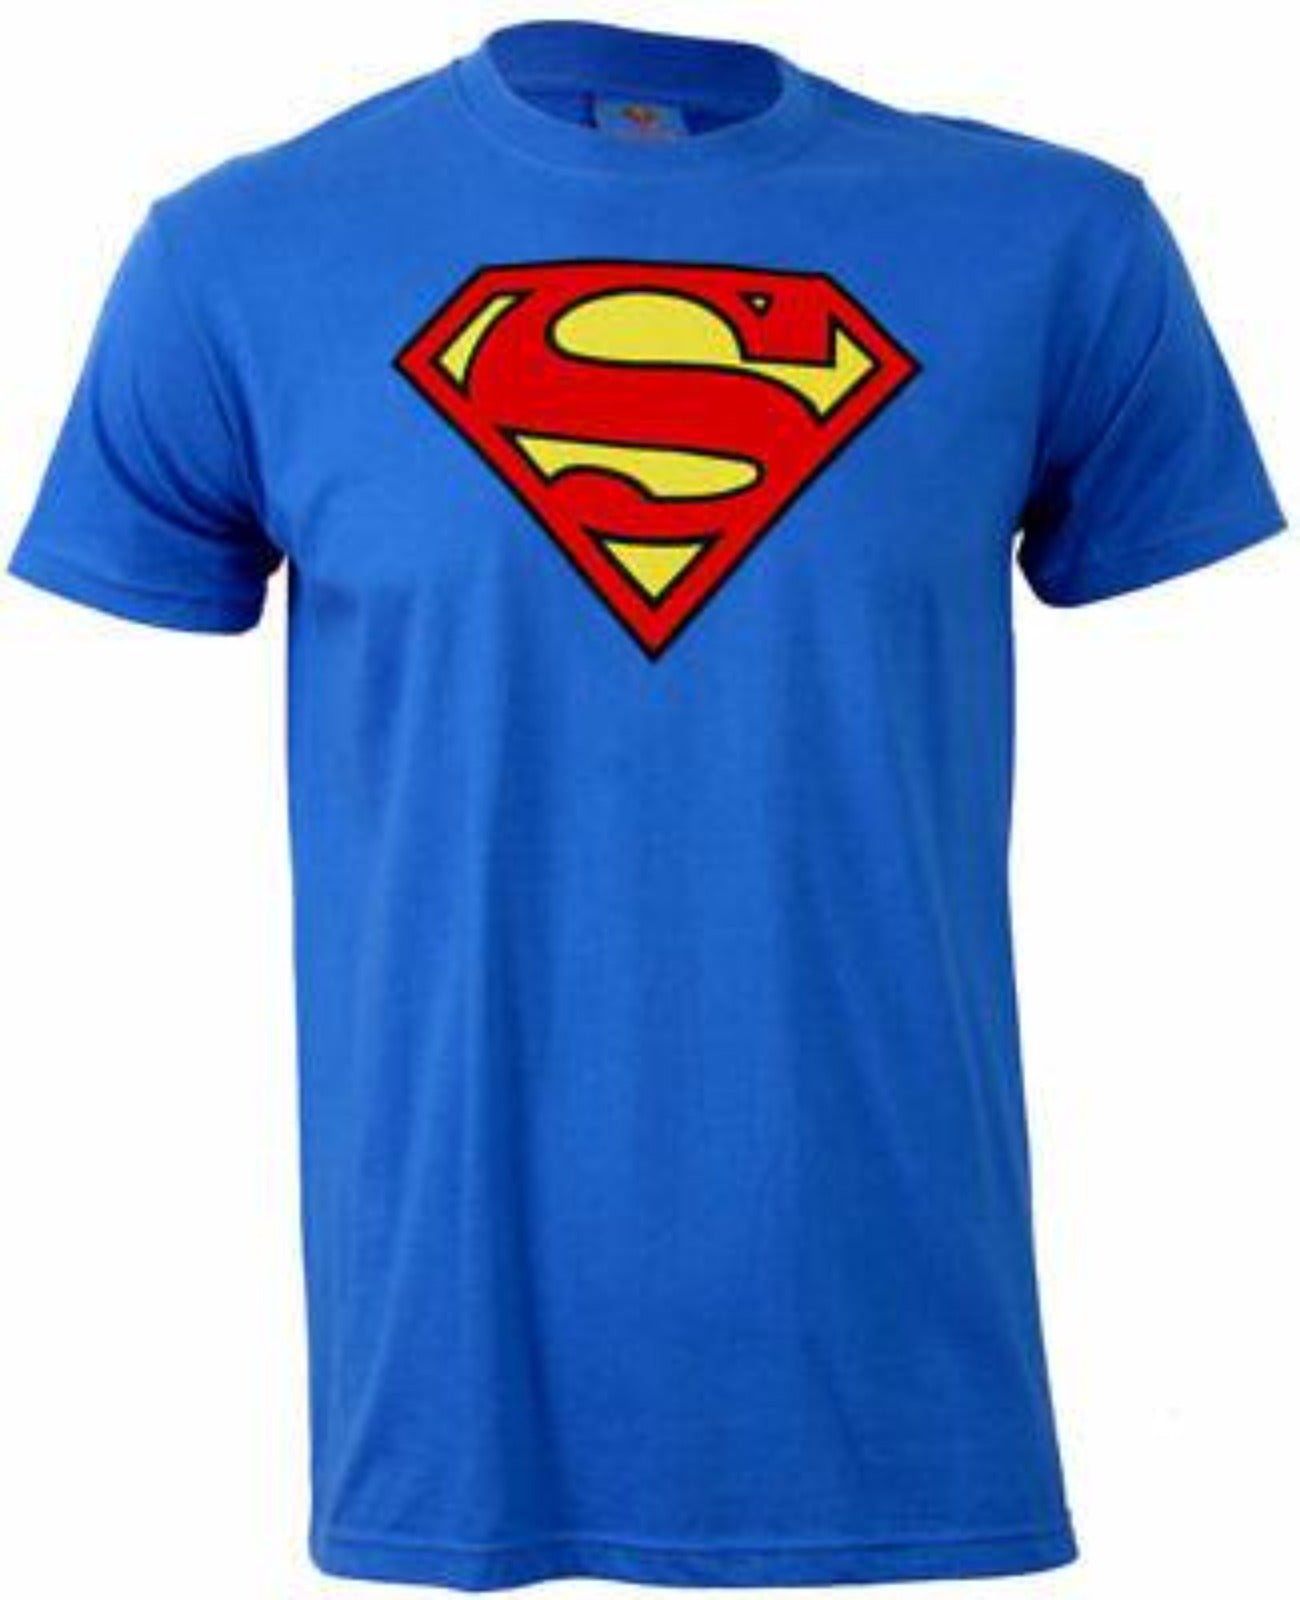 Industrial basura cuidadosamente Classic Superman T-Shirt Perth | Hurly Burly - Hurly-Burly